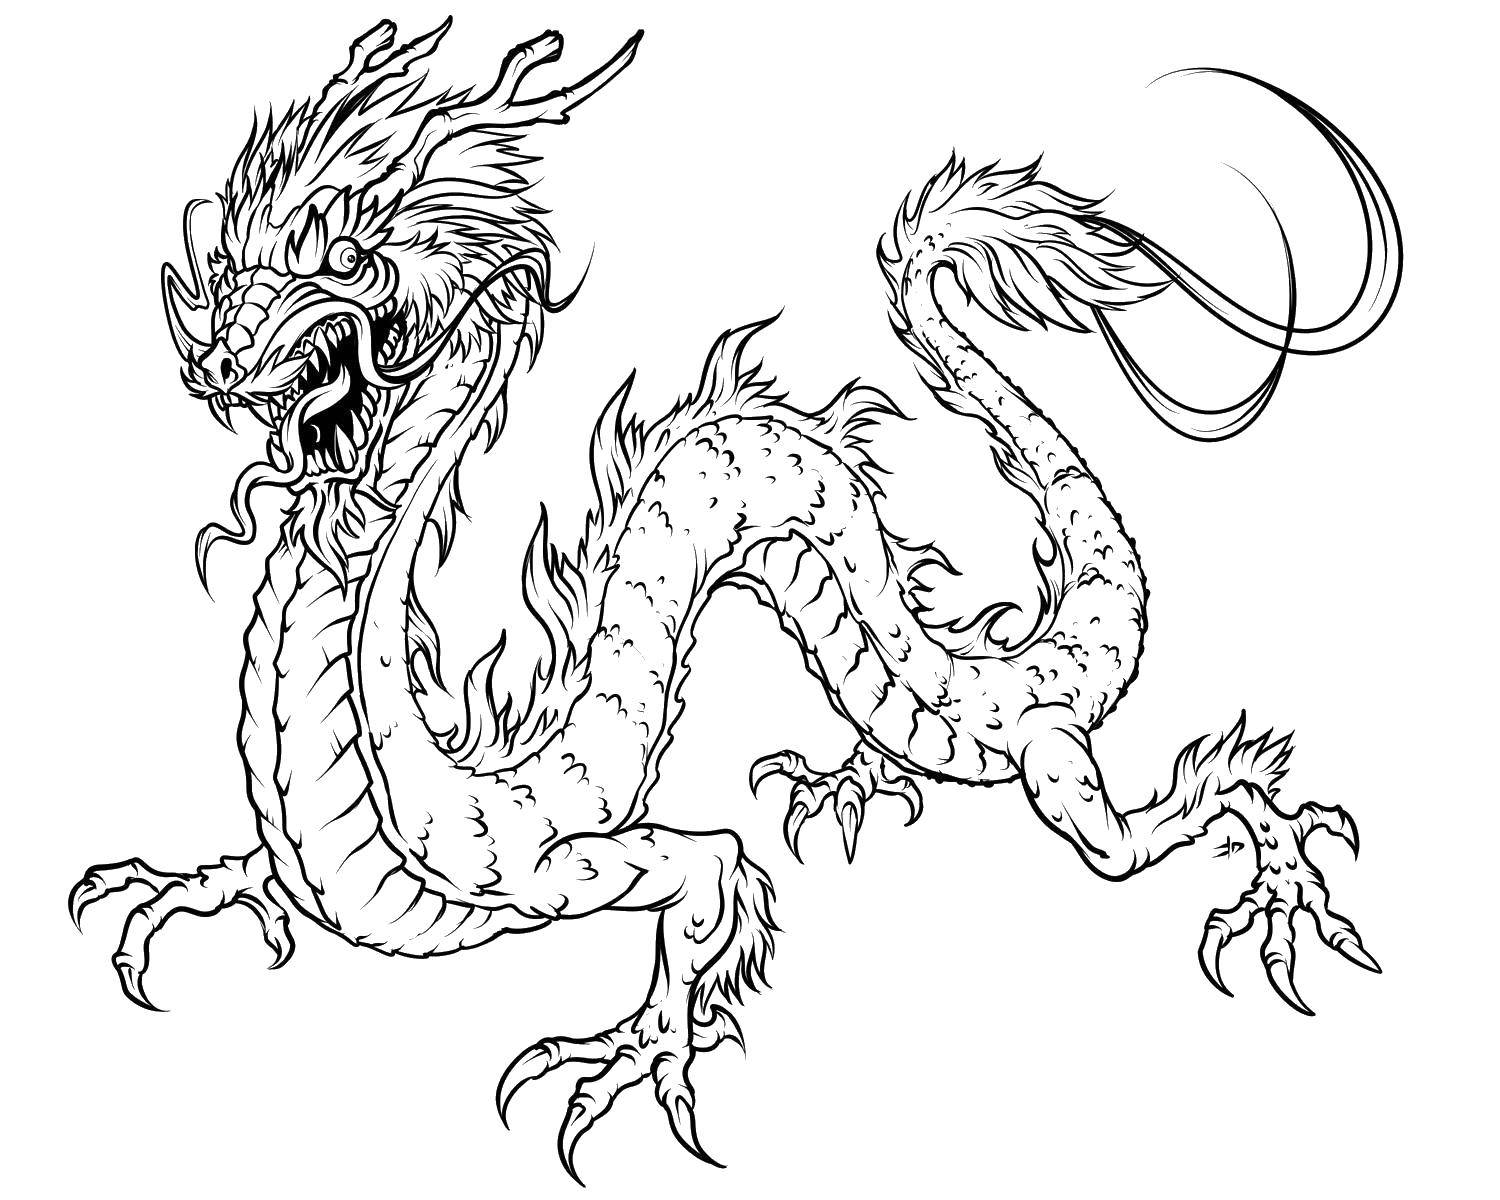 Coloring Terrible dragon. Category Dragons. Tags:  Dragons.